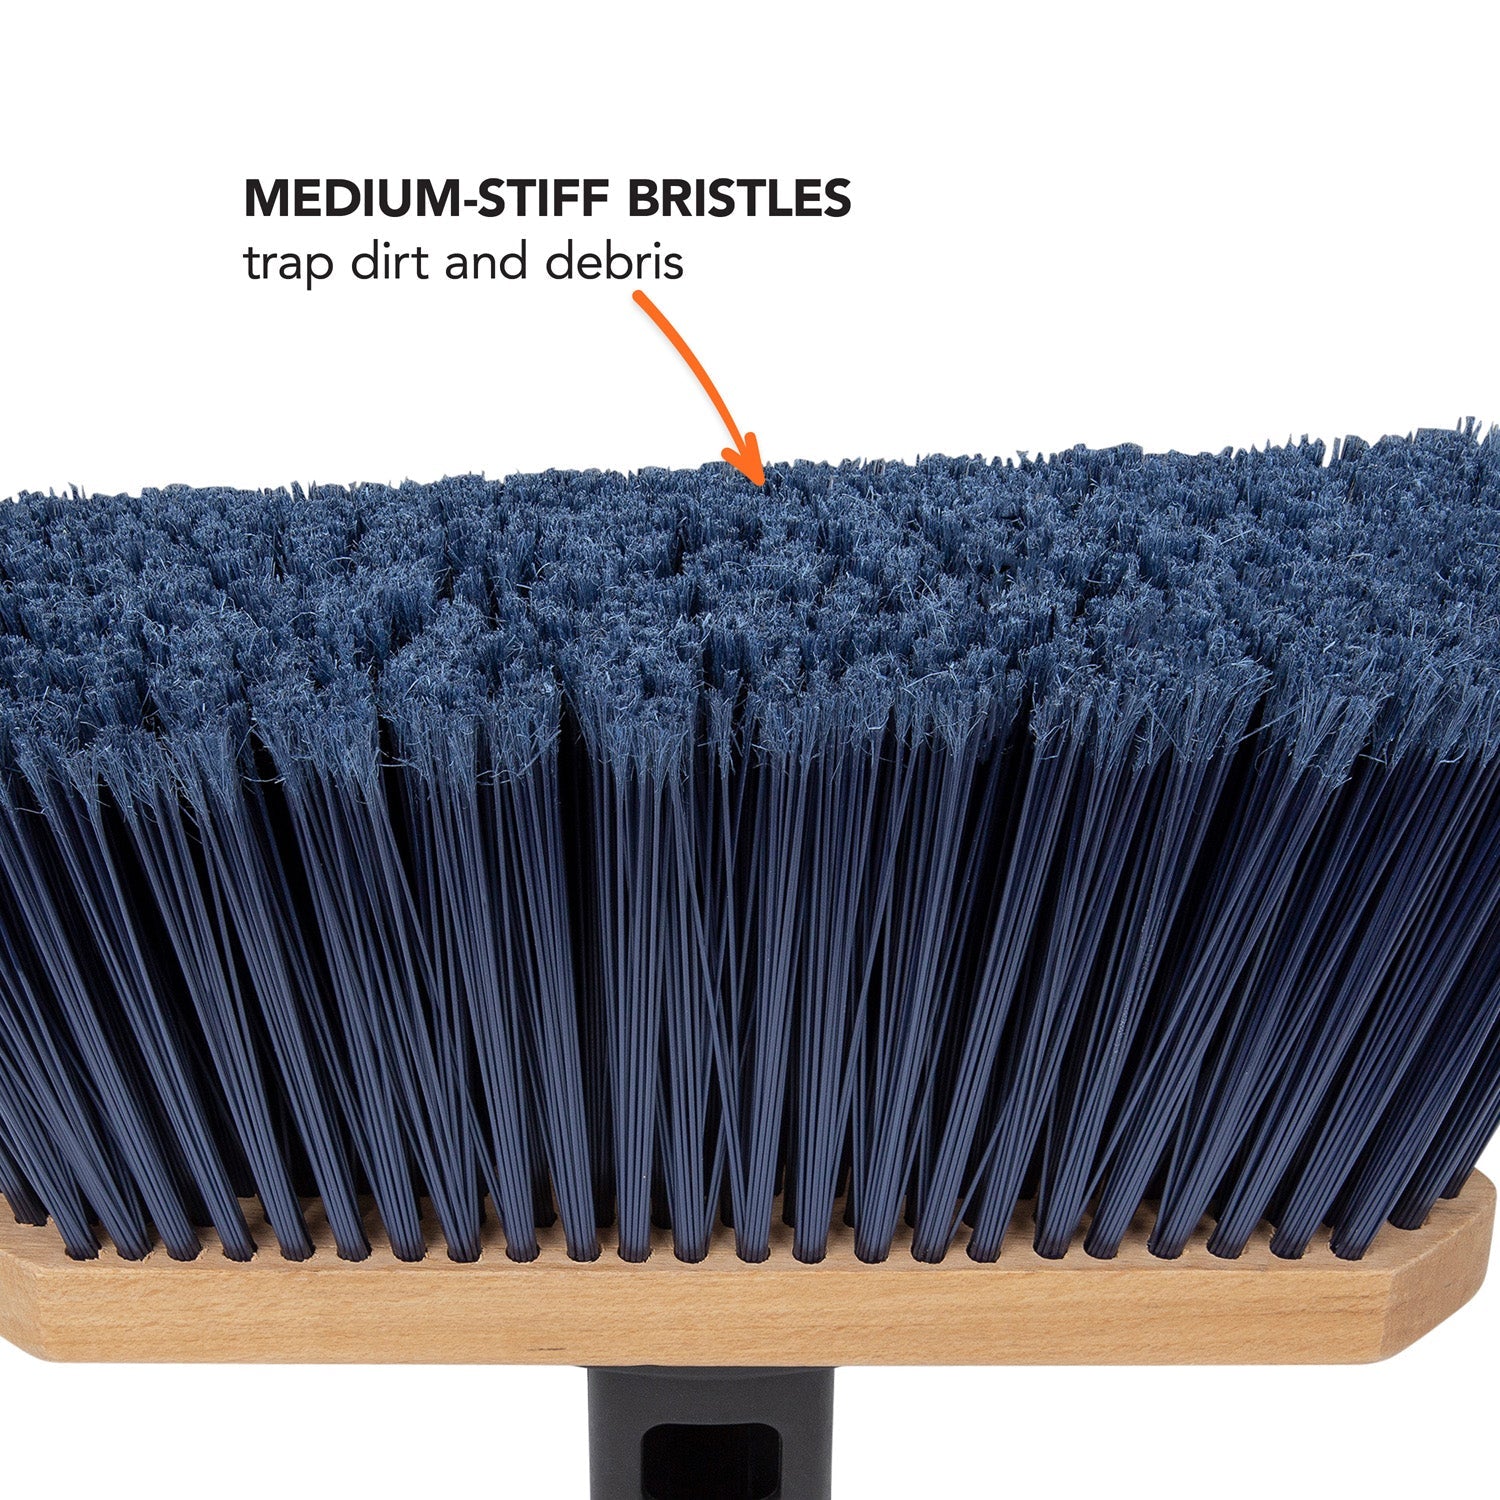 Pet Hair & Multi-Surface Broom